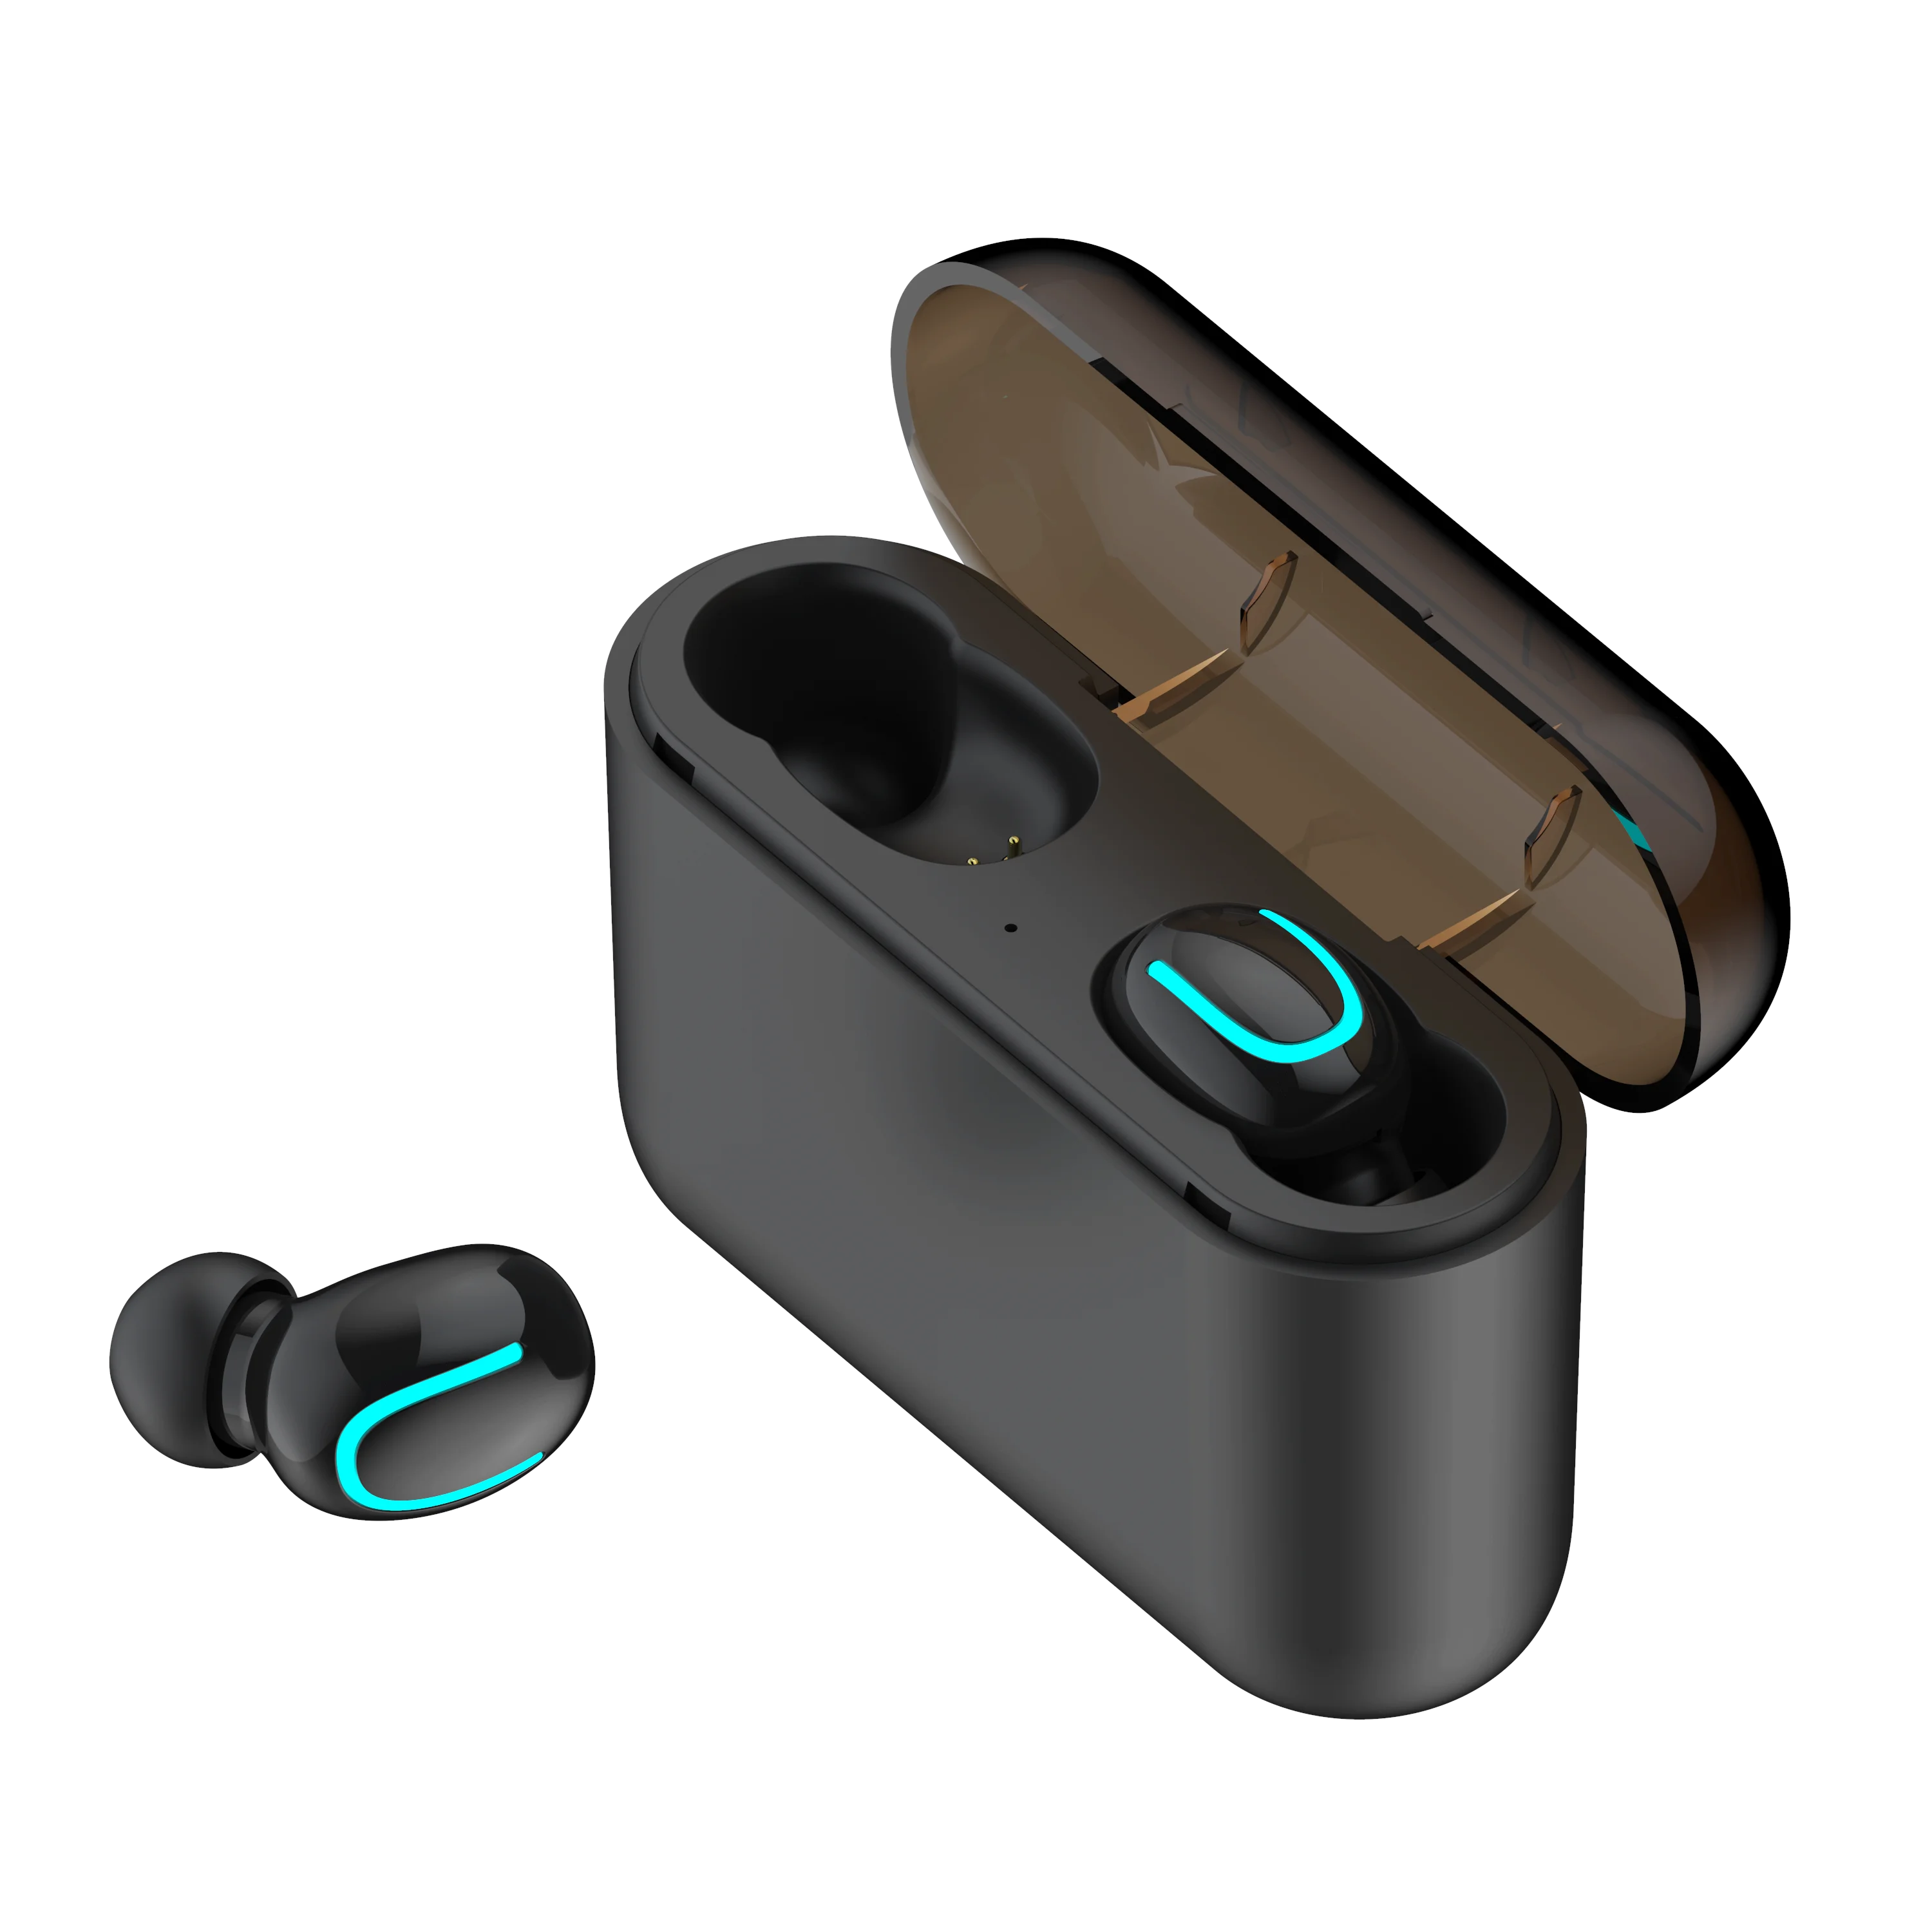 

TWS Mini in-ear blue tooth 5.0 earphones Q32 bluetooths wireless earphones headphones mobile phone earbuds with charging